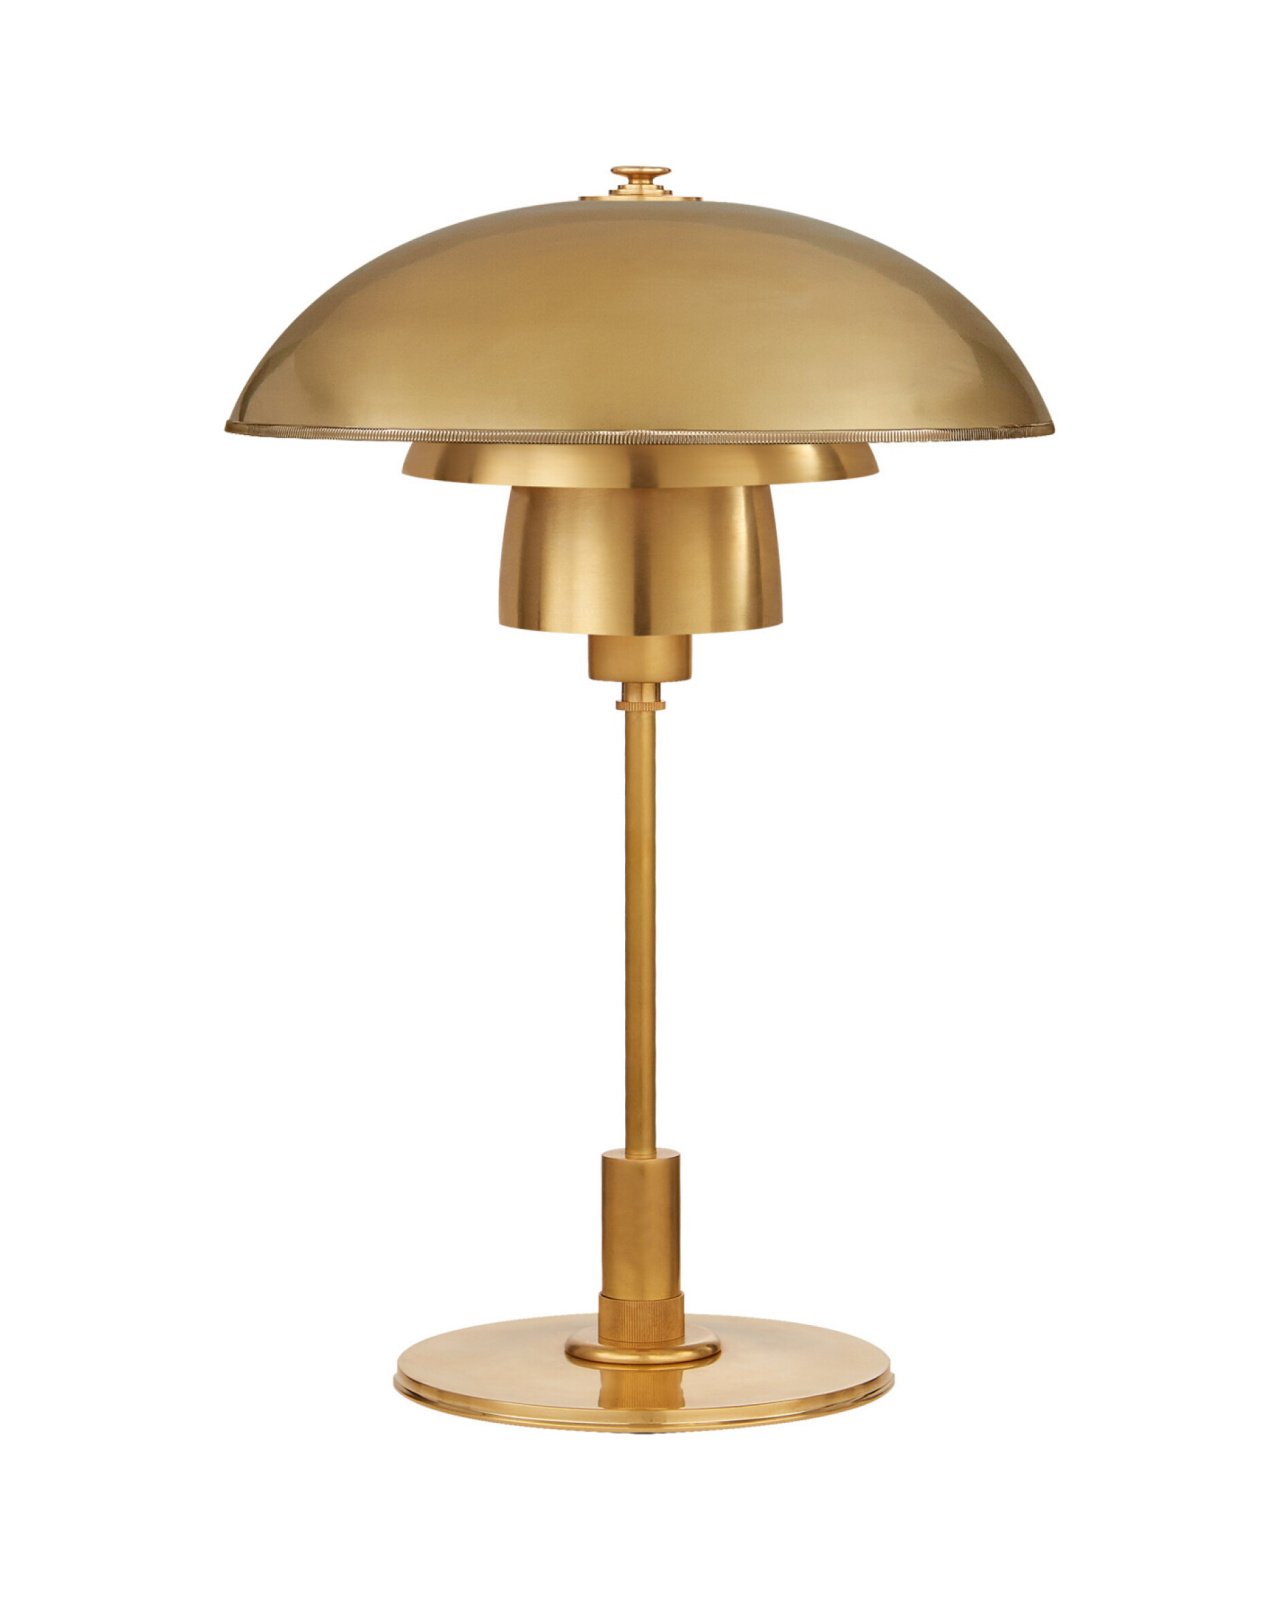 Whitman Desk Lamp Antique Brass